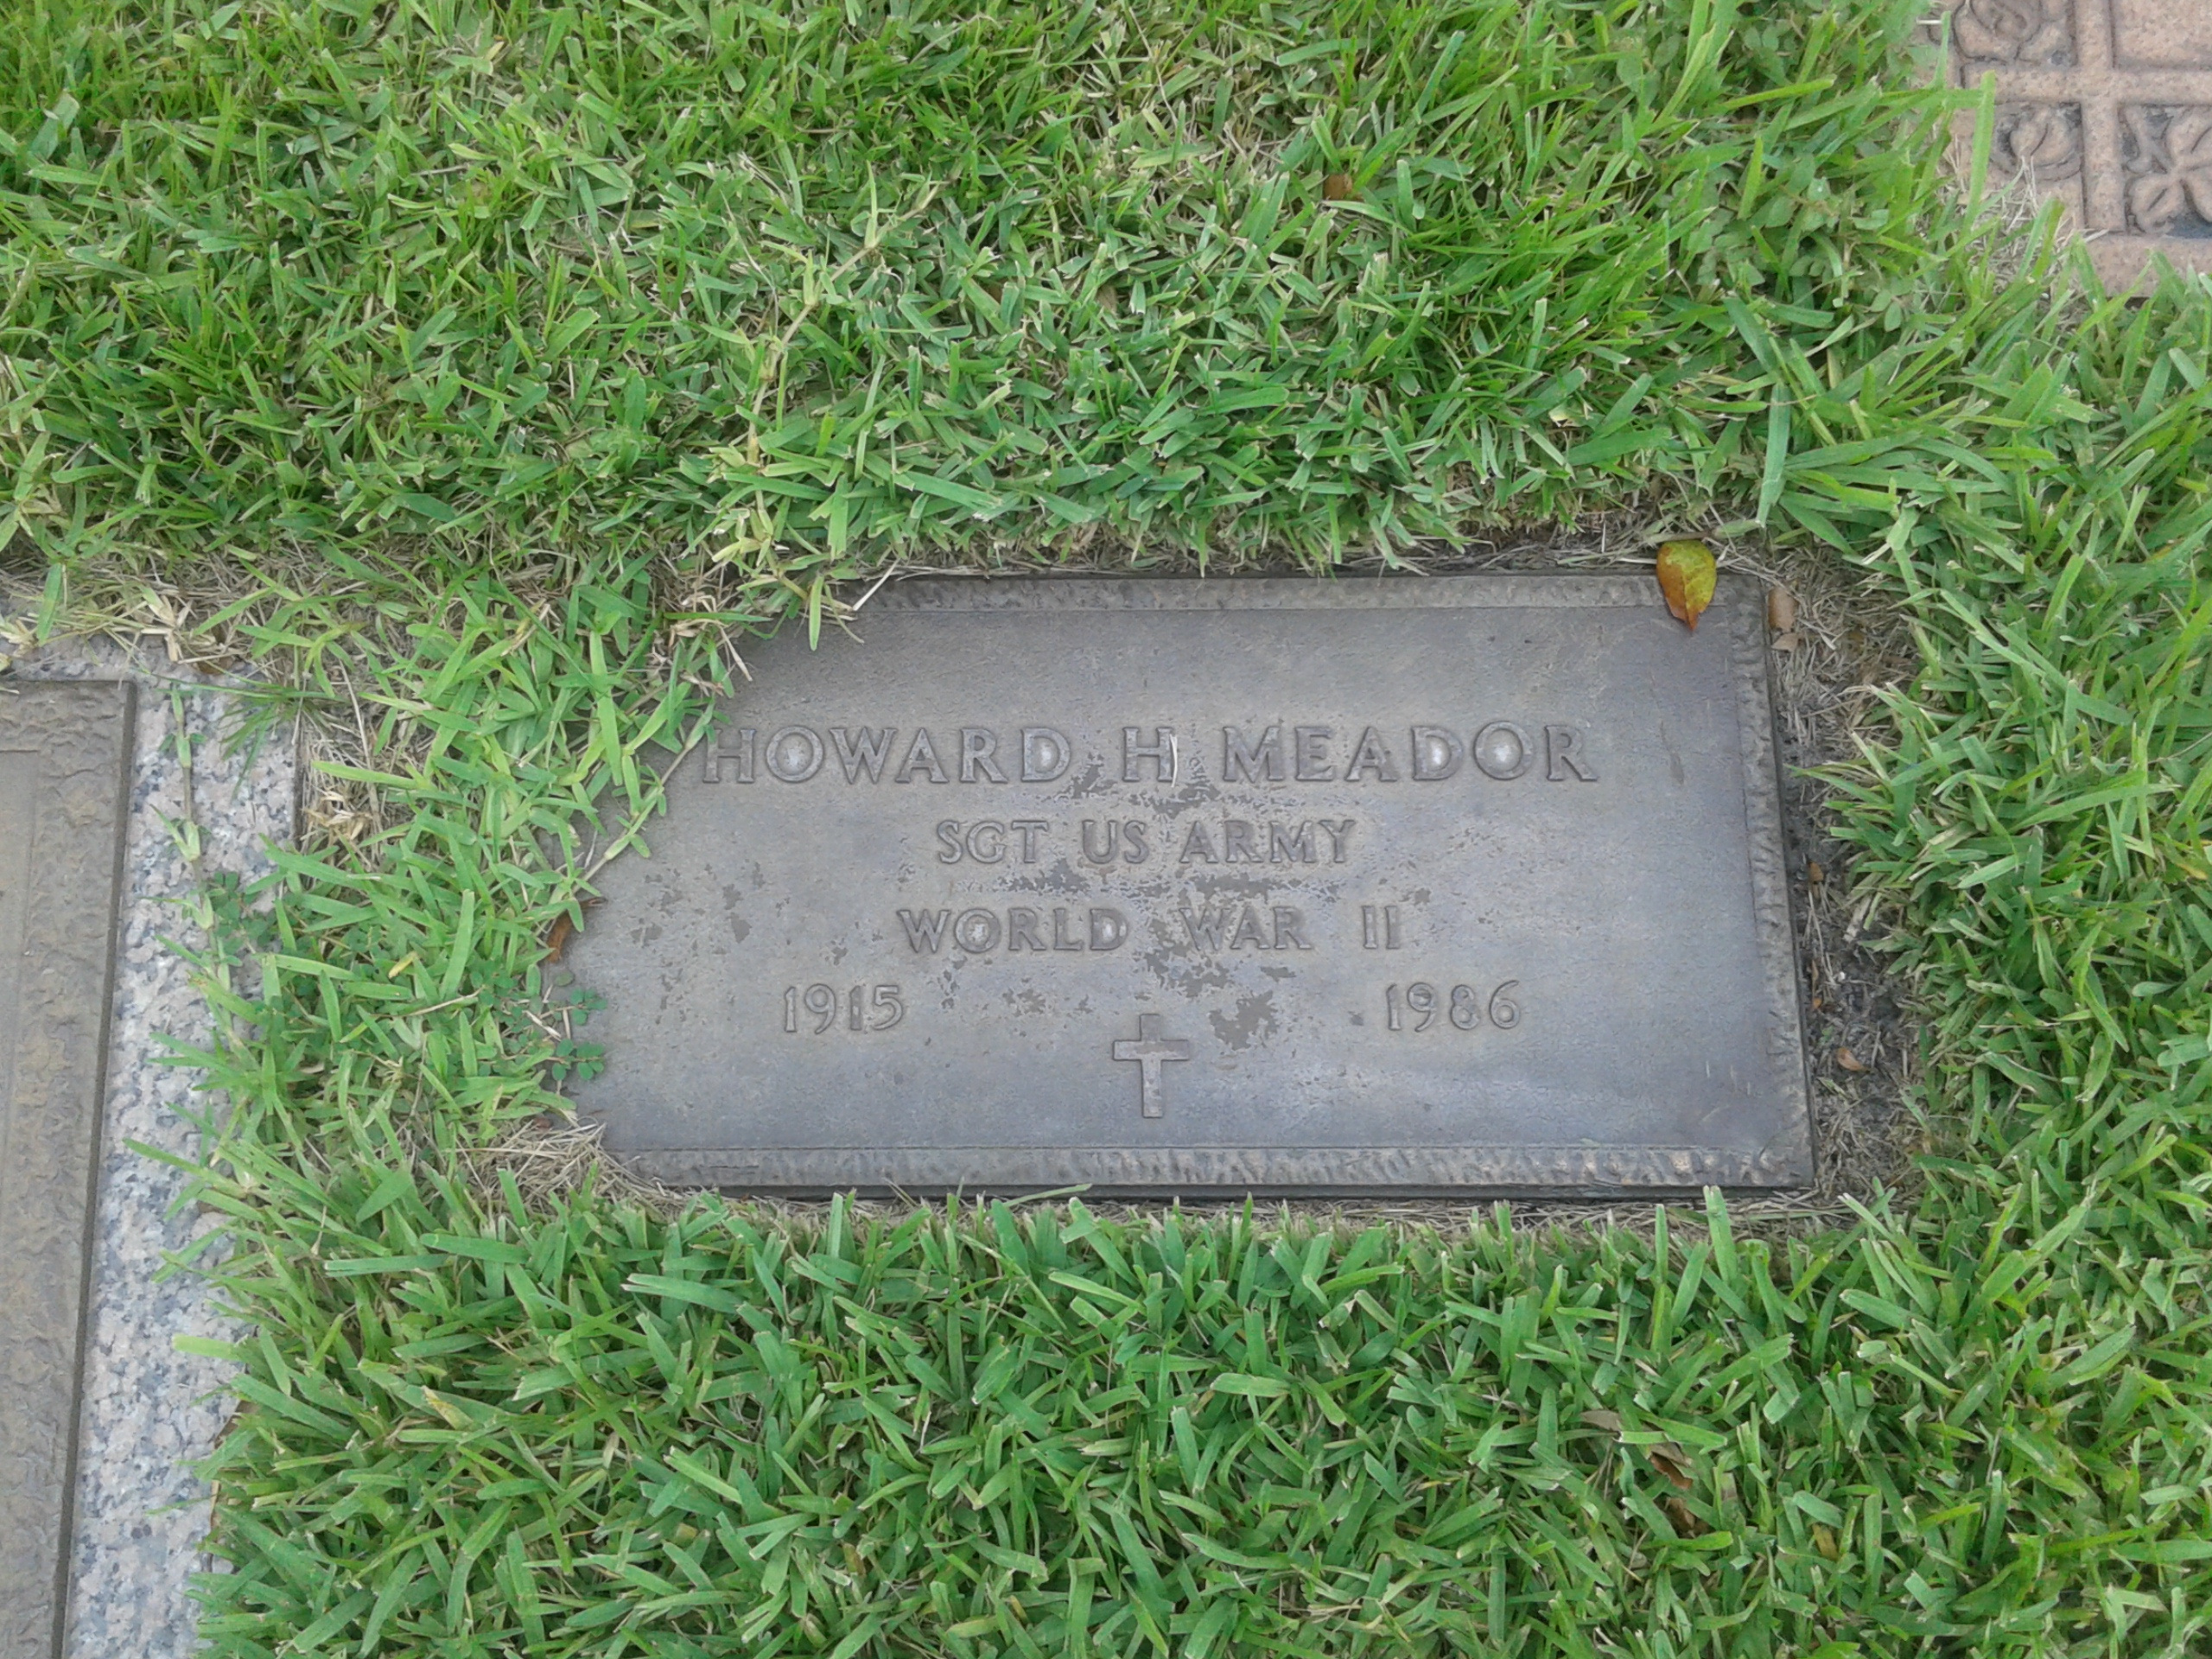 Howard H Meador